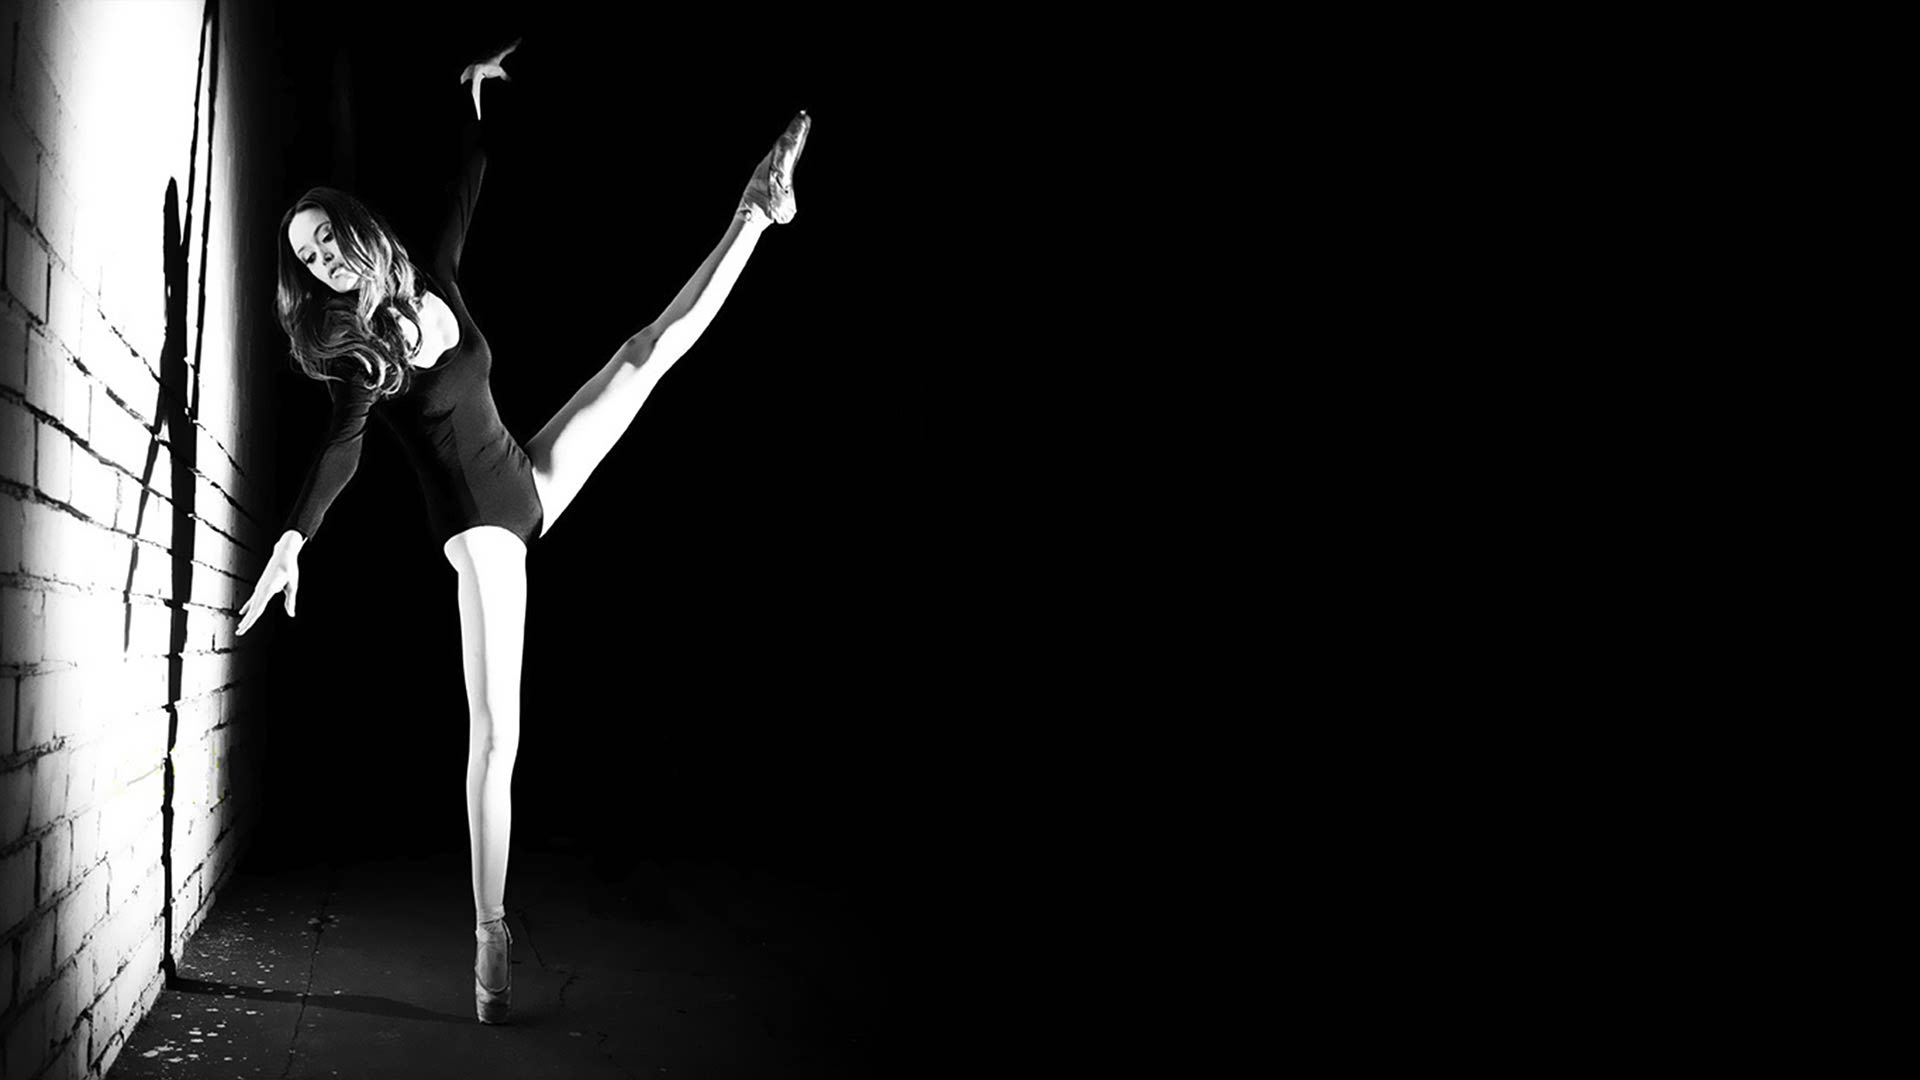 Ballerina beauty, Artful wallpapers, Dance aesthetics, Captivating poses, 1920x1080 Full HD Desktop